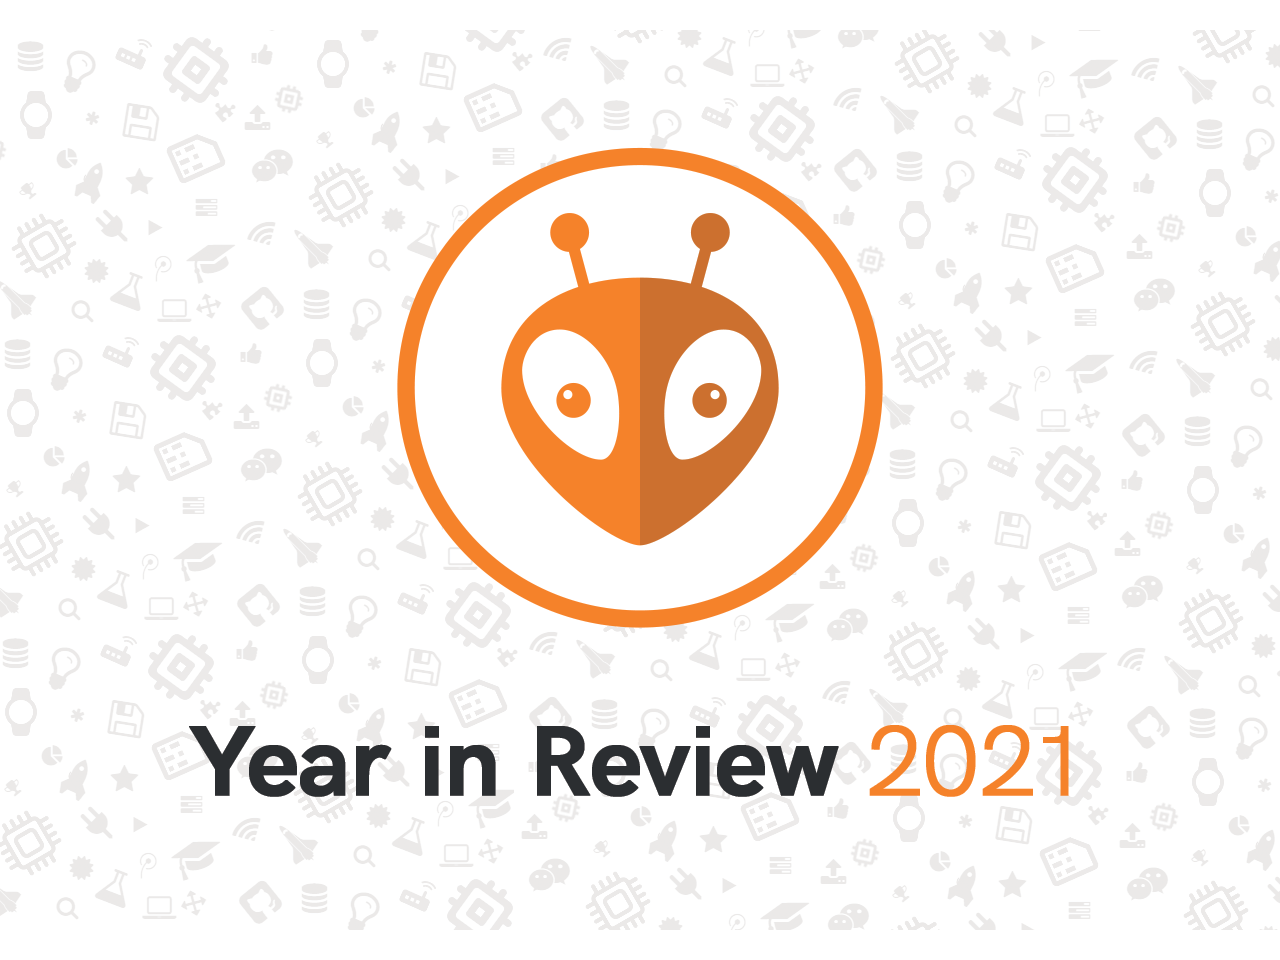 PlatformIO 2021 Year in Review